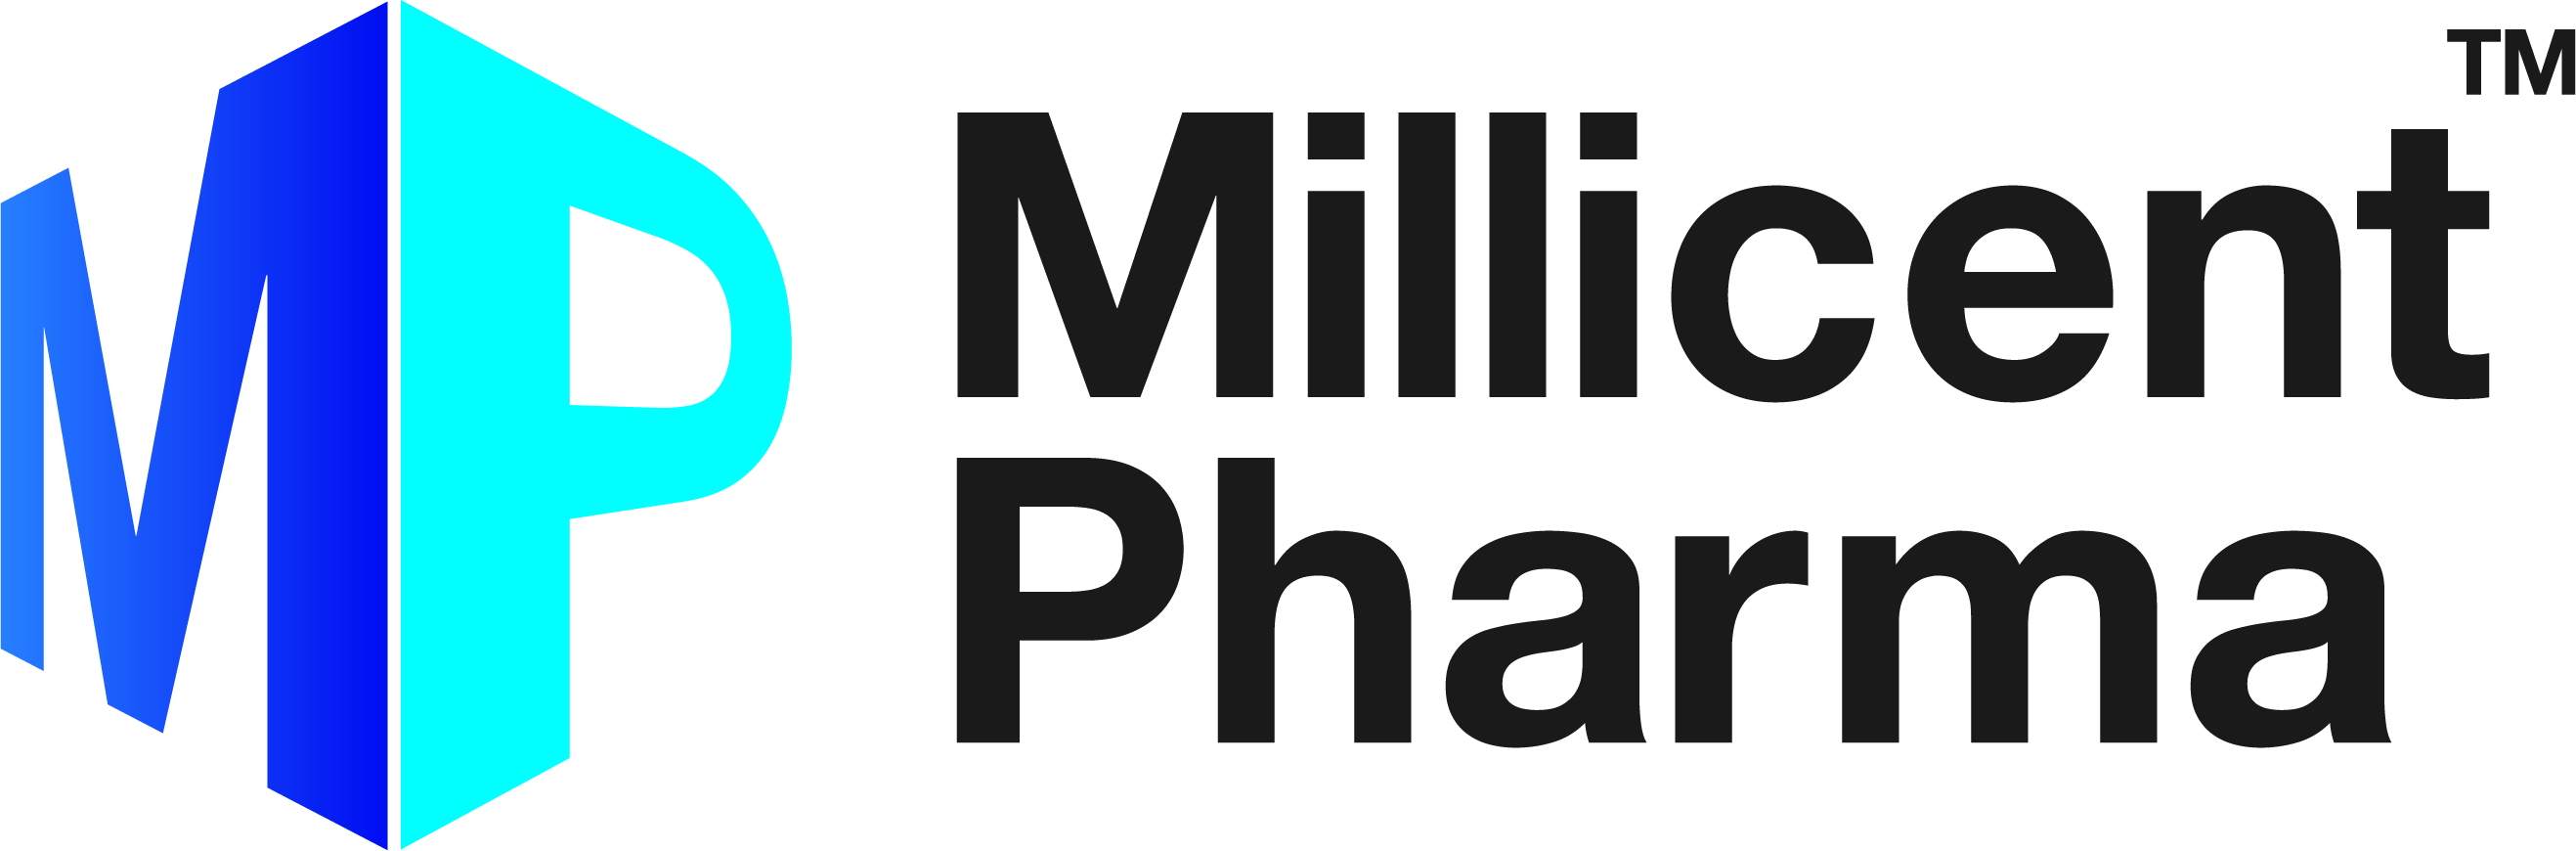 Millicent Pharma Logo CMYK